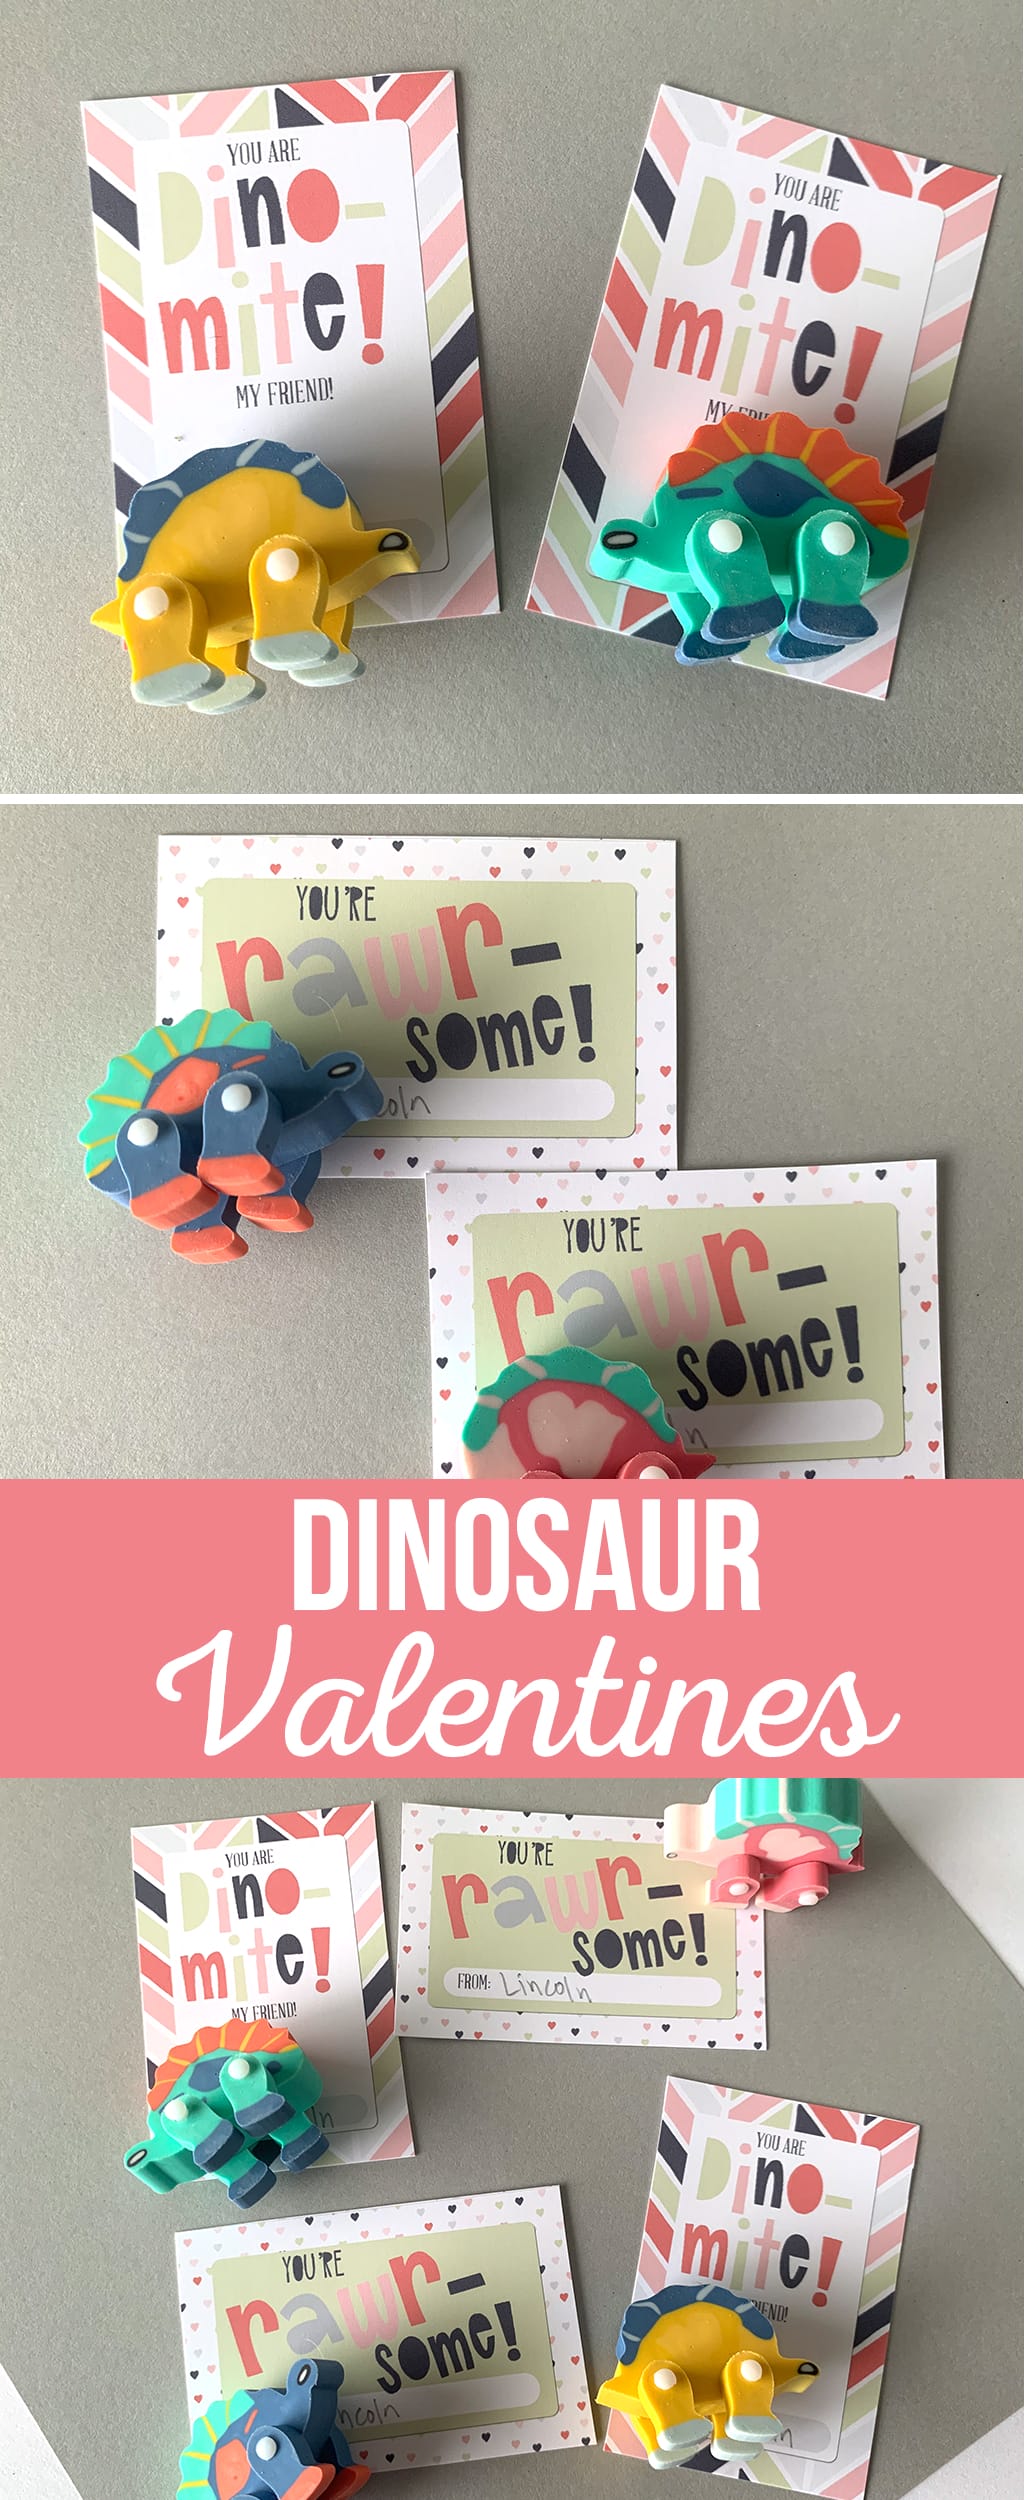 Dinosaur Valentines on a gray background with Dinosaur erasers.